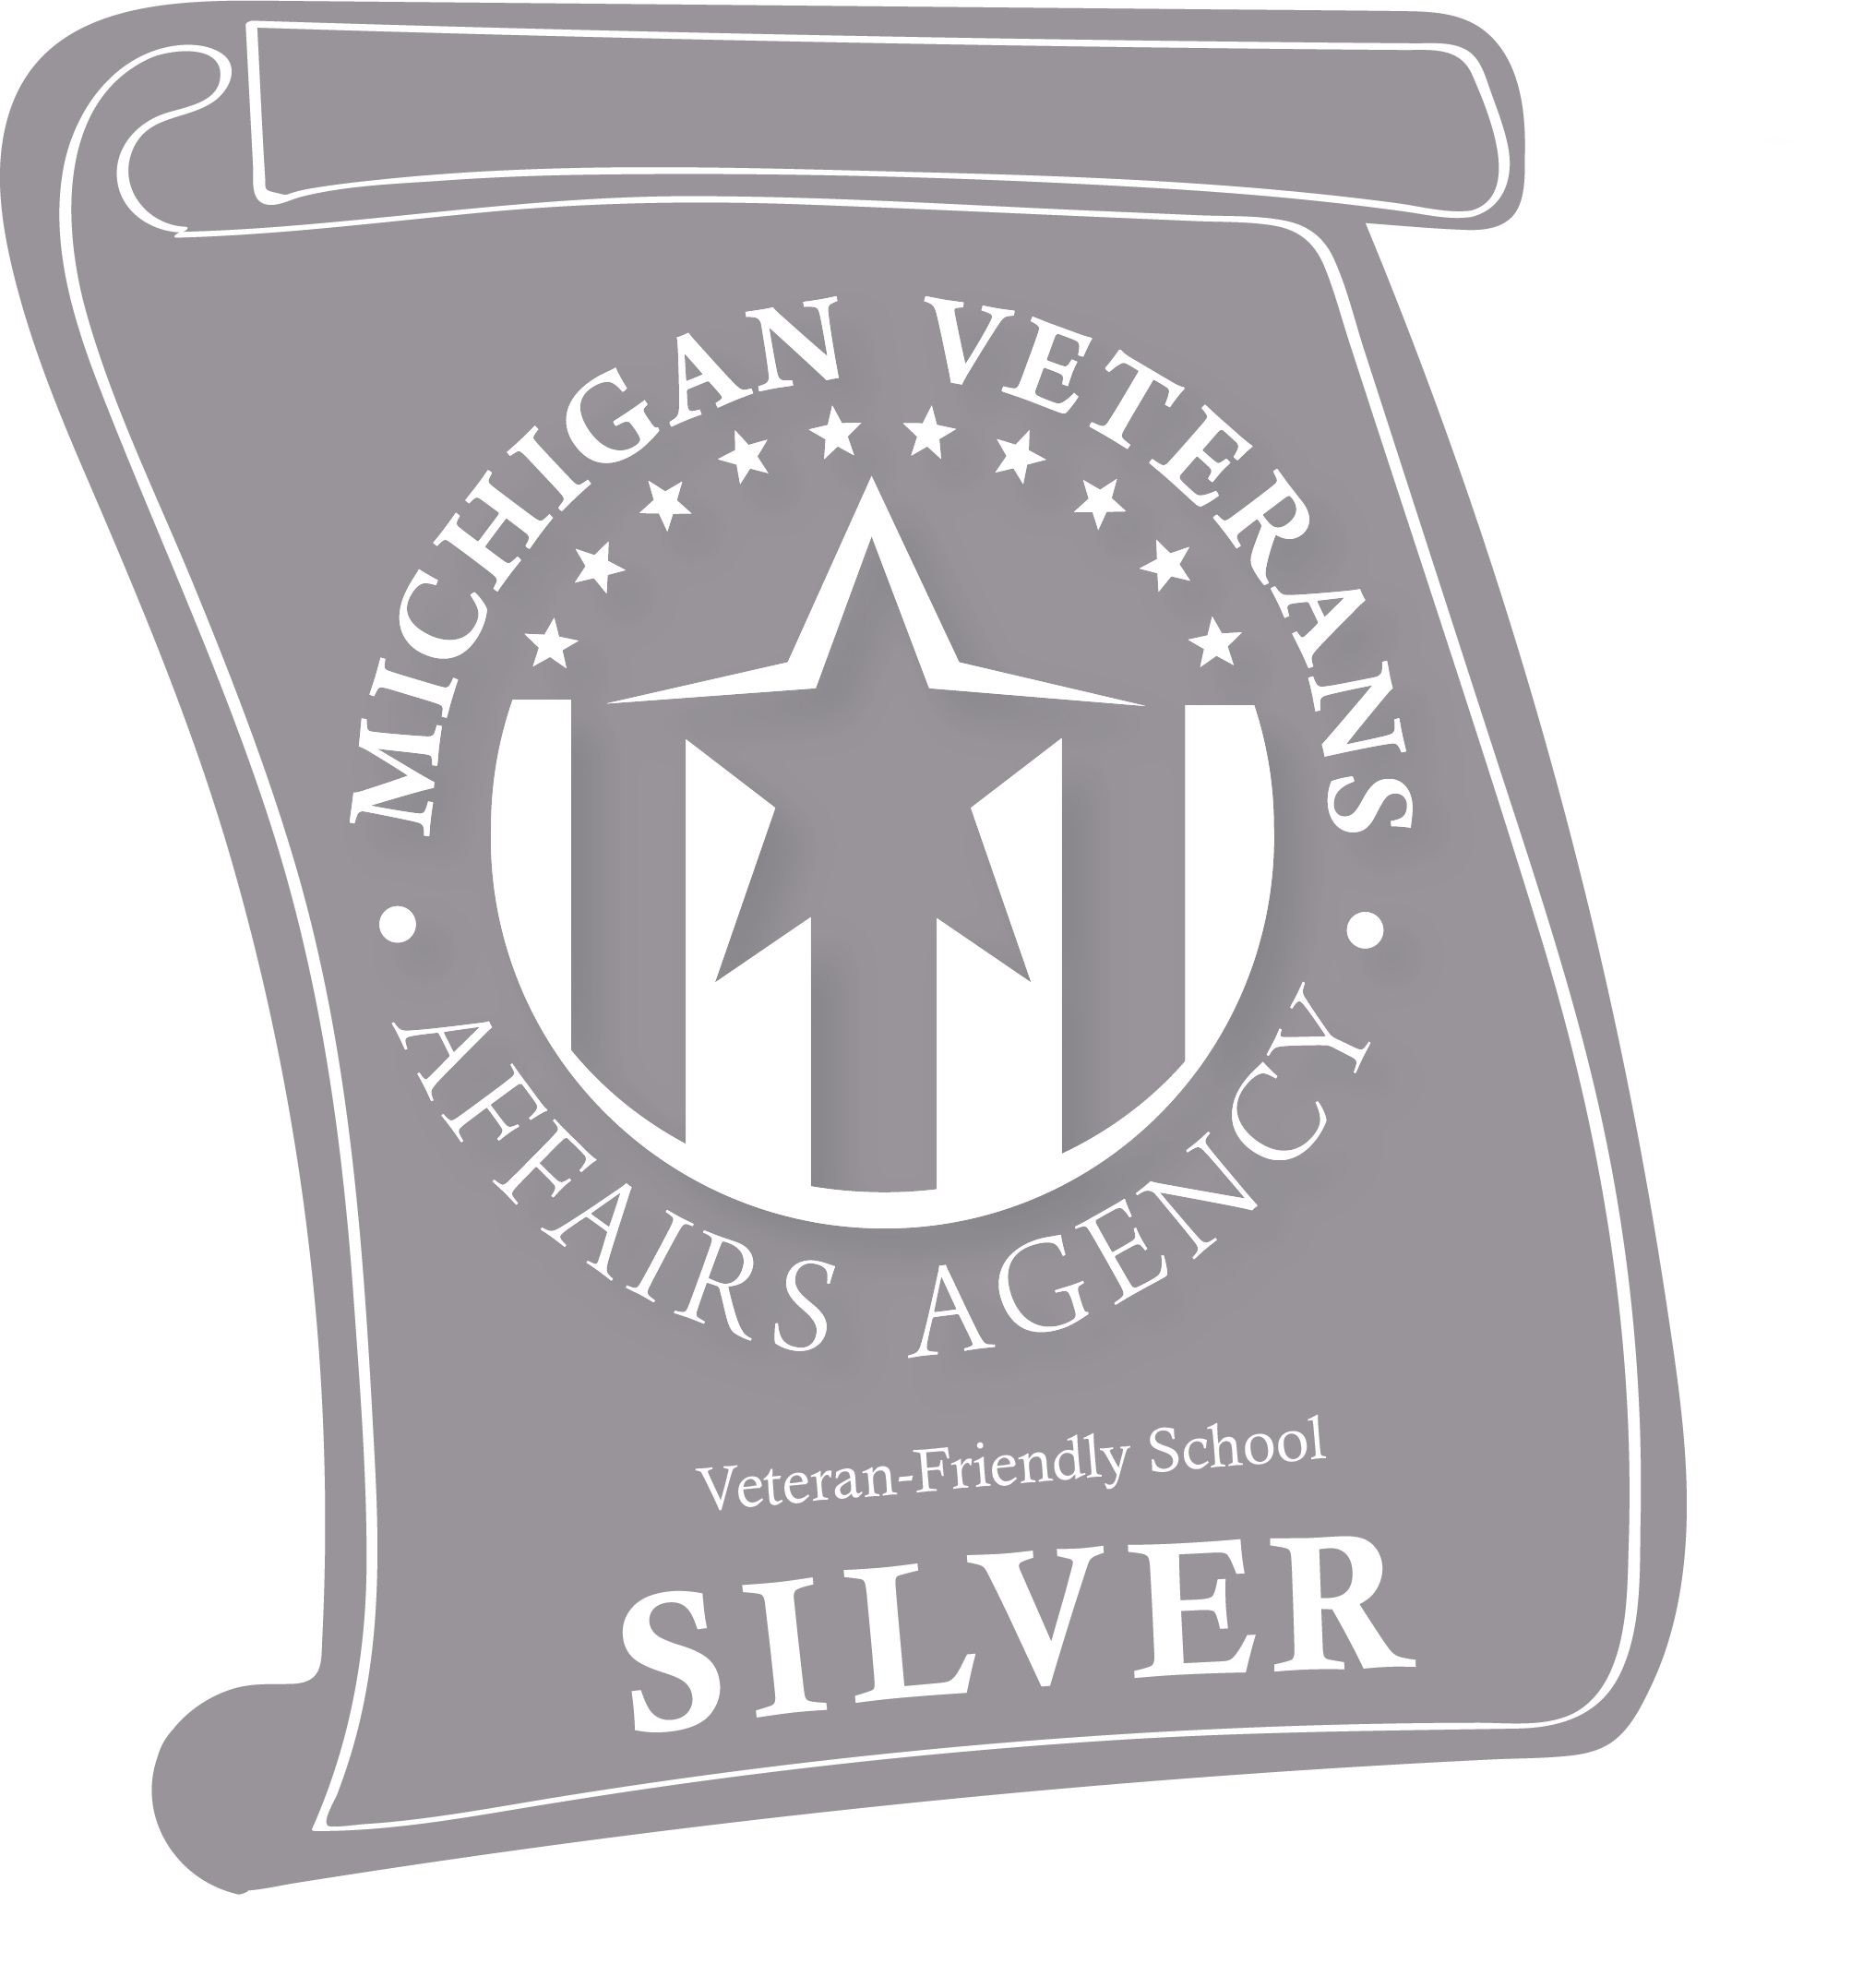 Link to MVAA Veteran-Friendly School website - LMC has a silver designation.